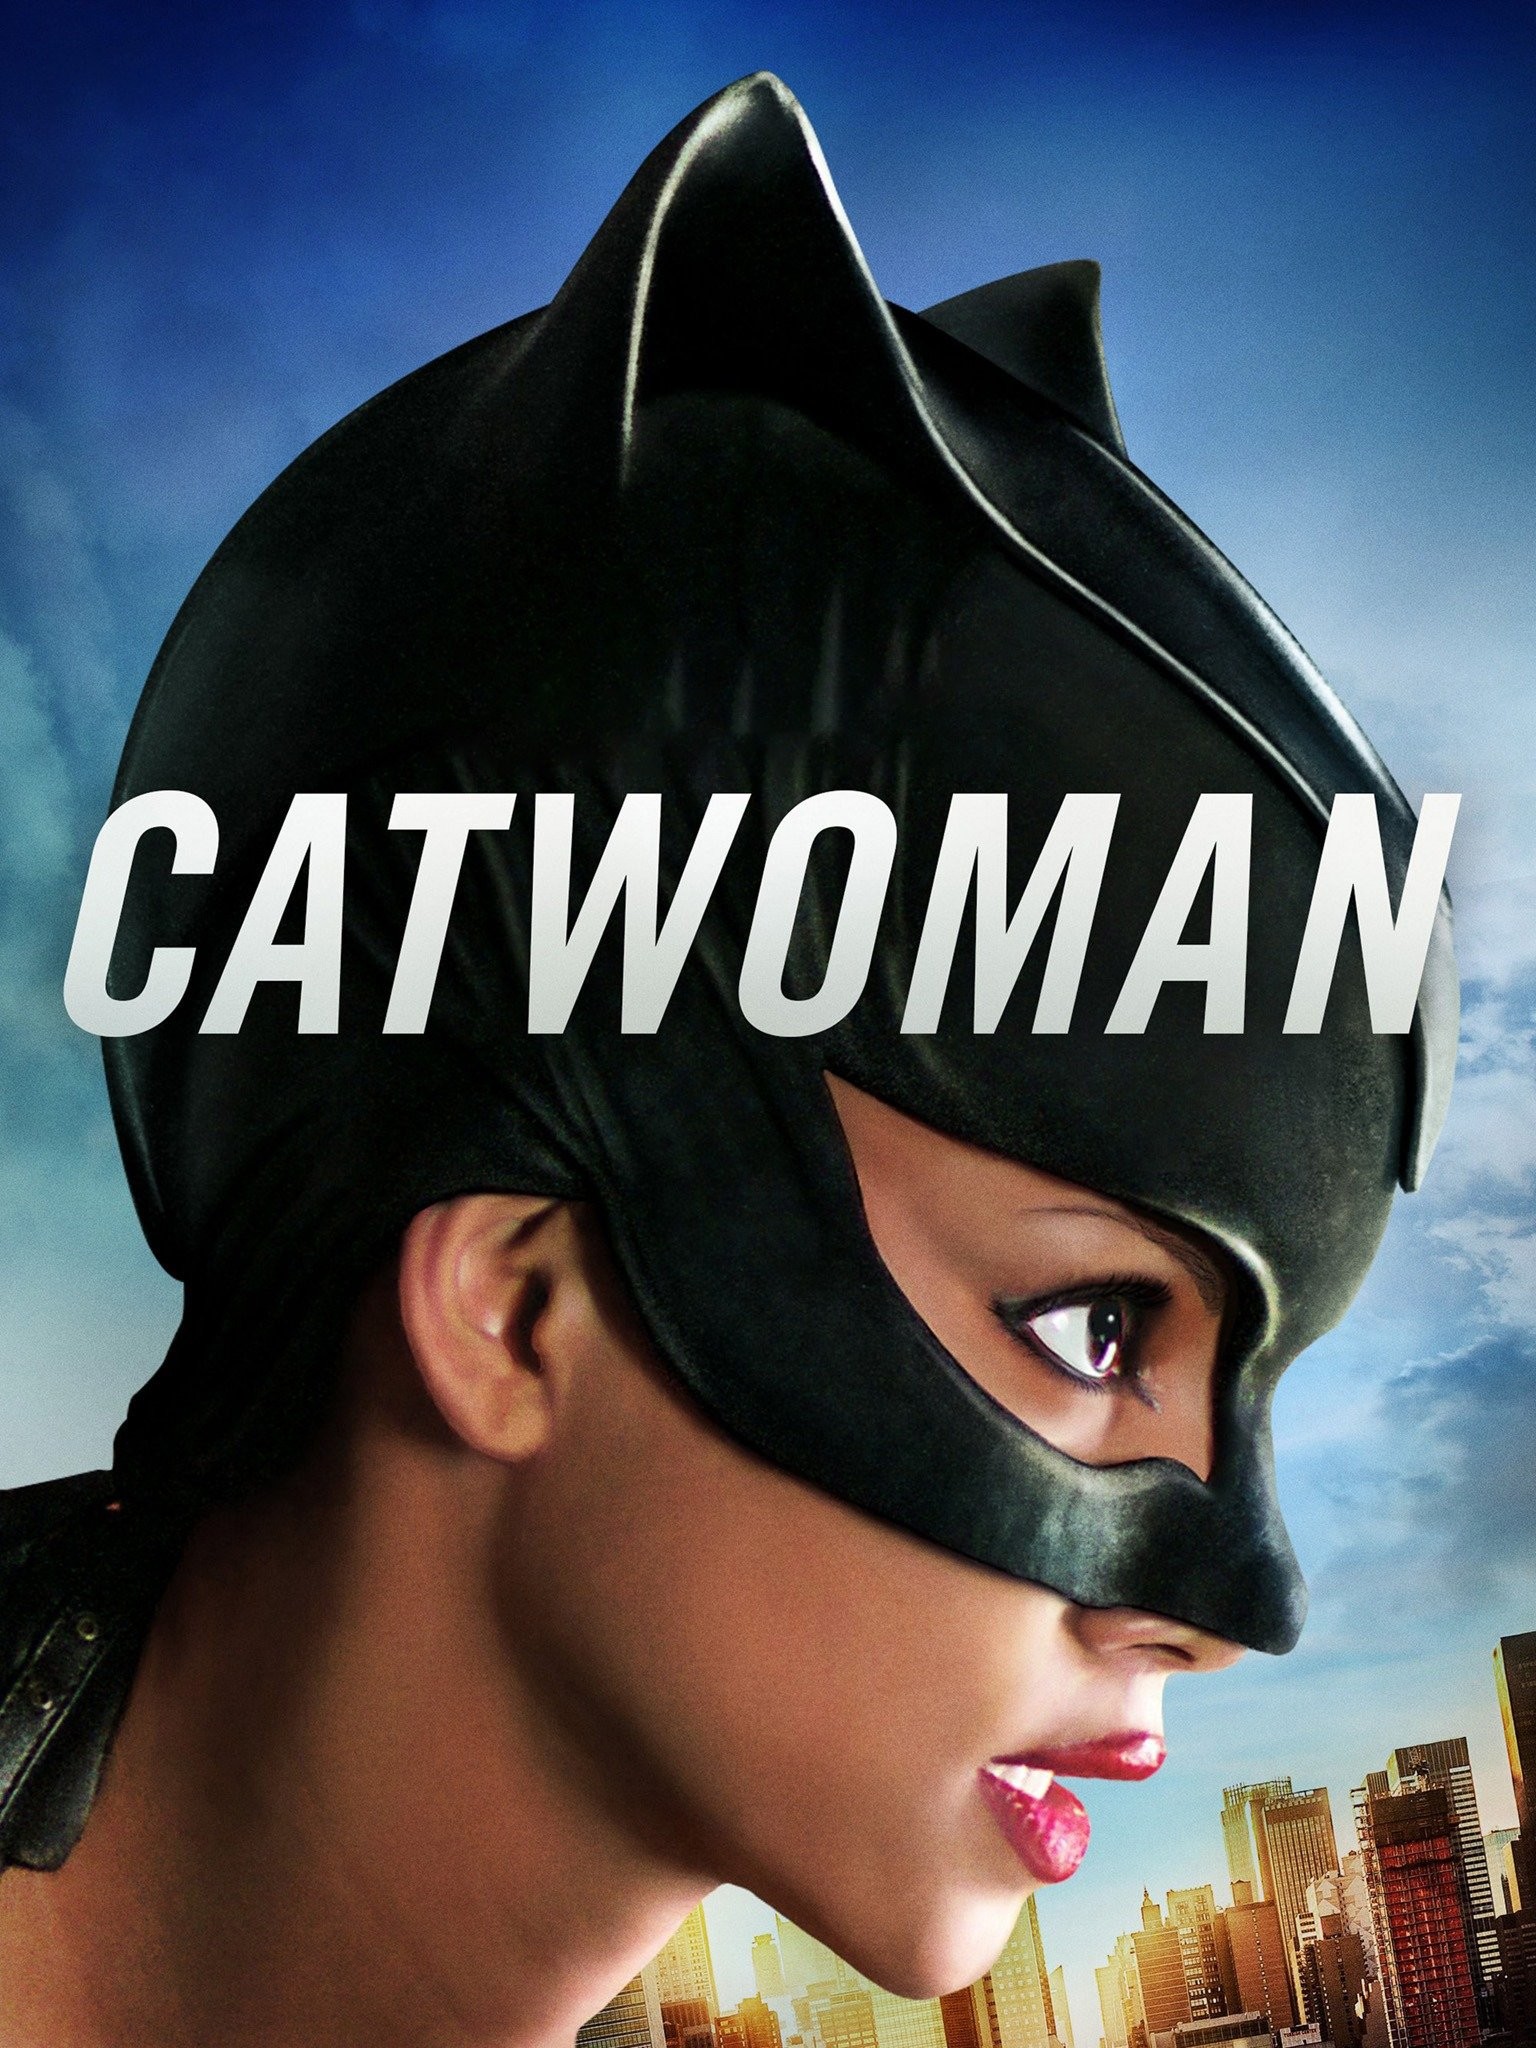 Catwoman 2004 Costume